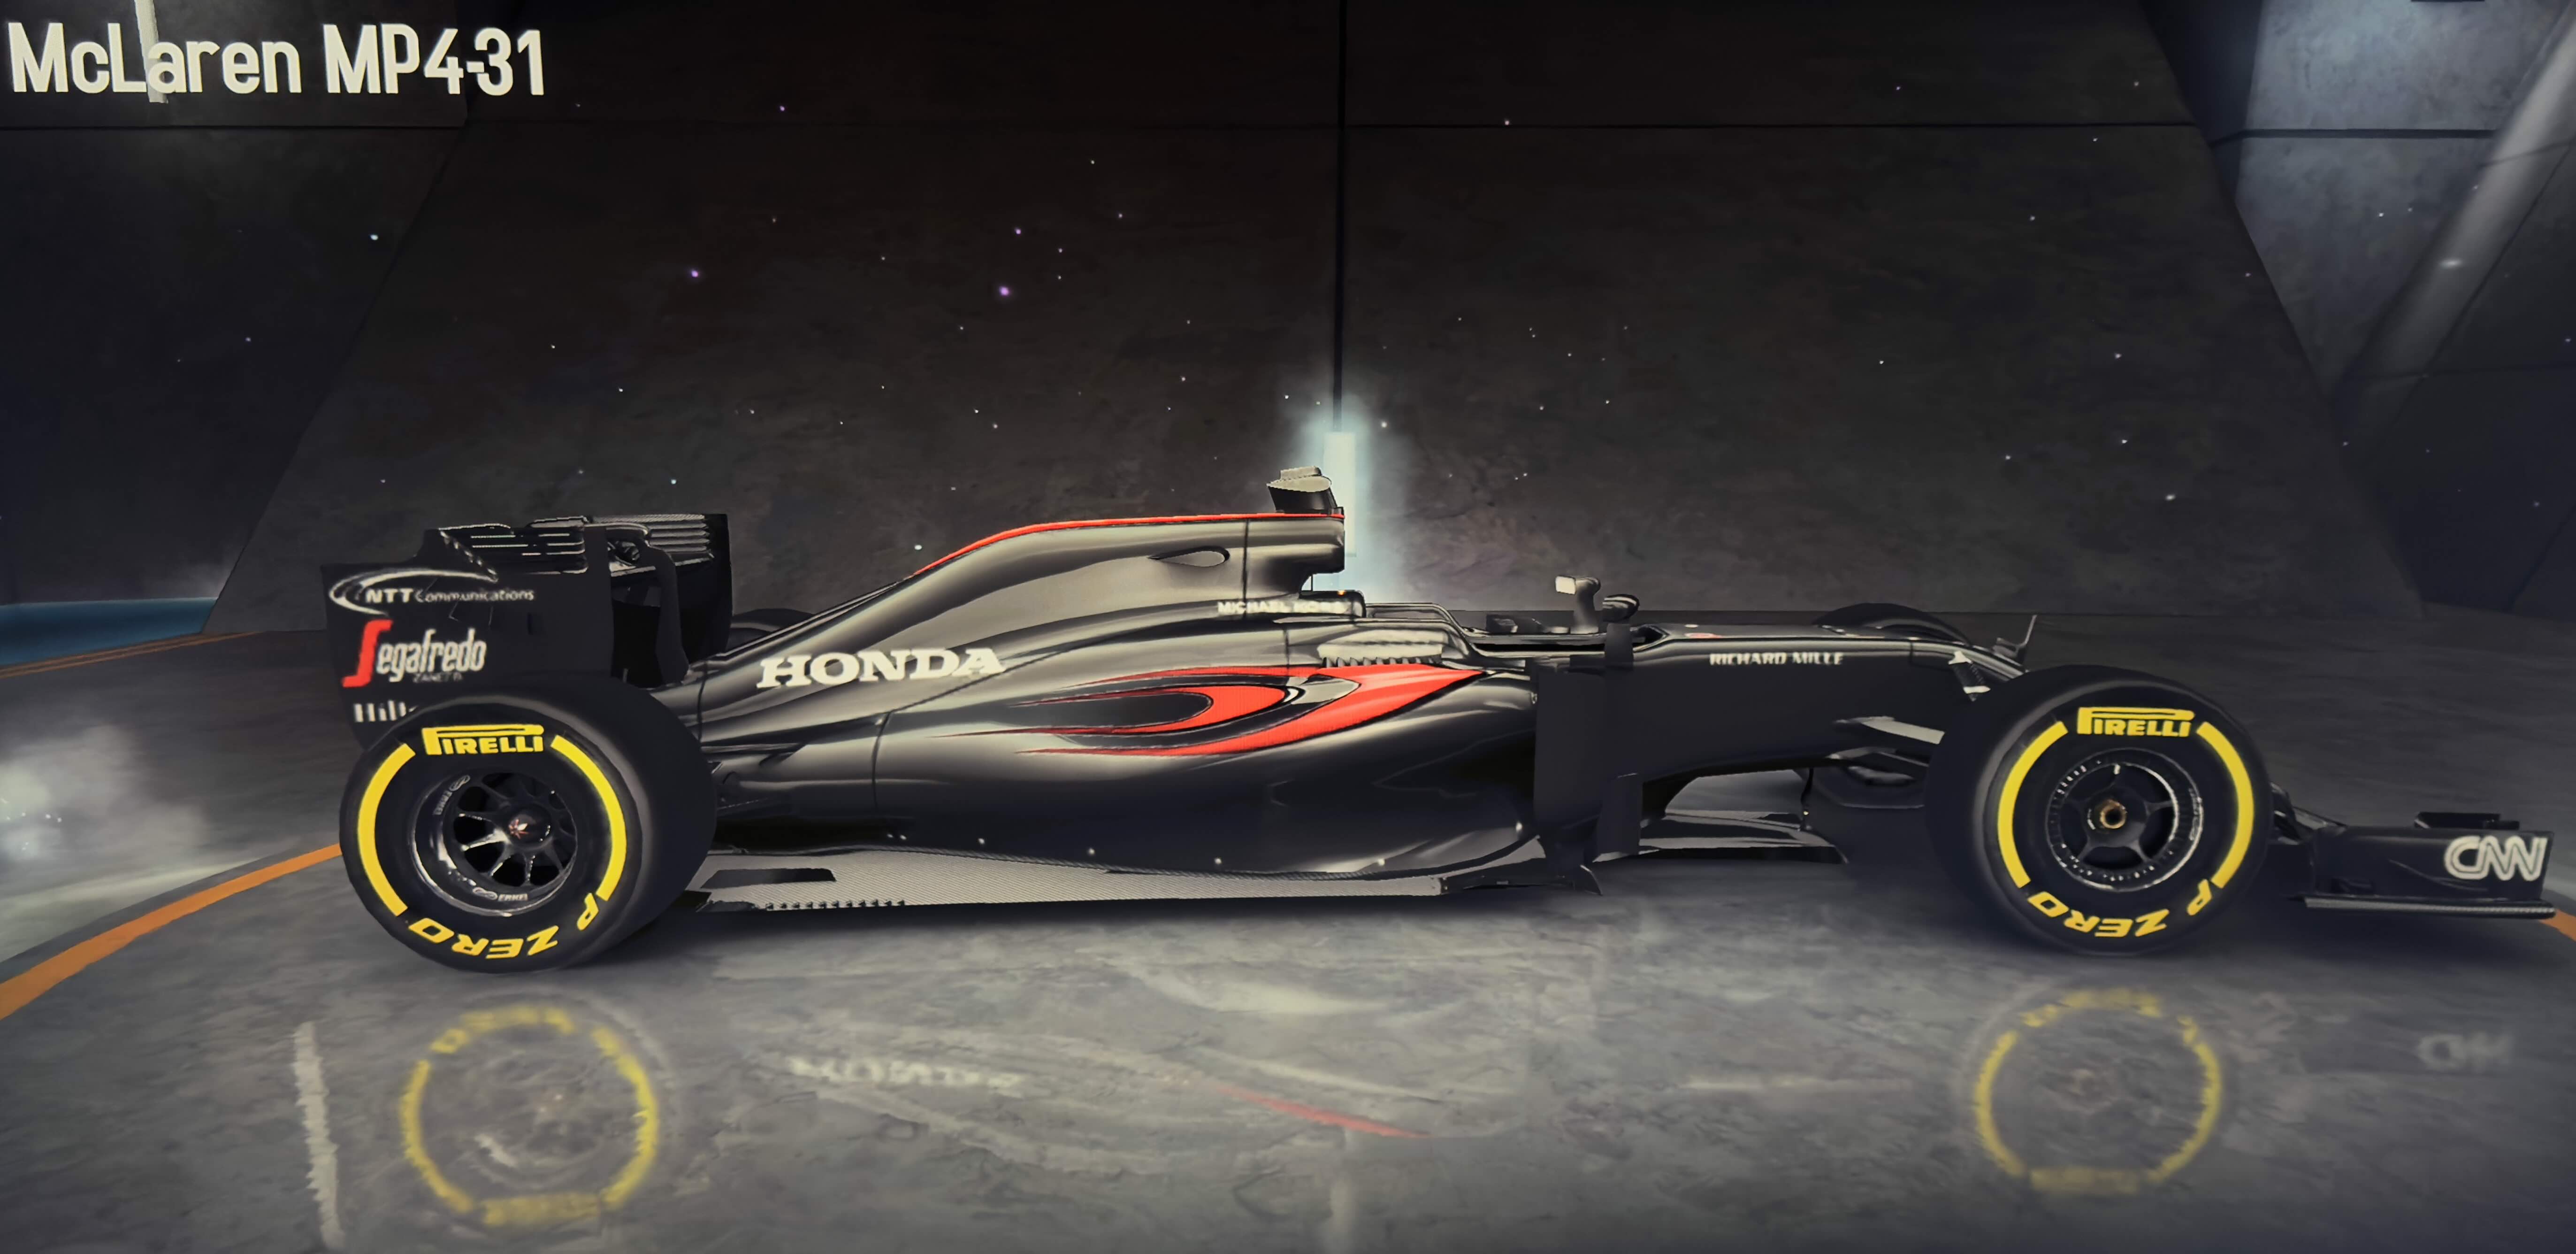 Top prize; the McLaren F1